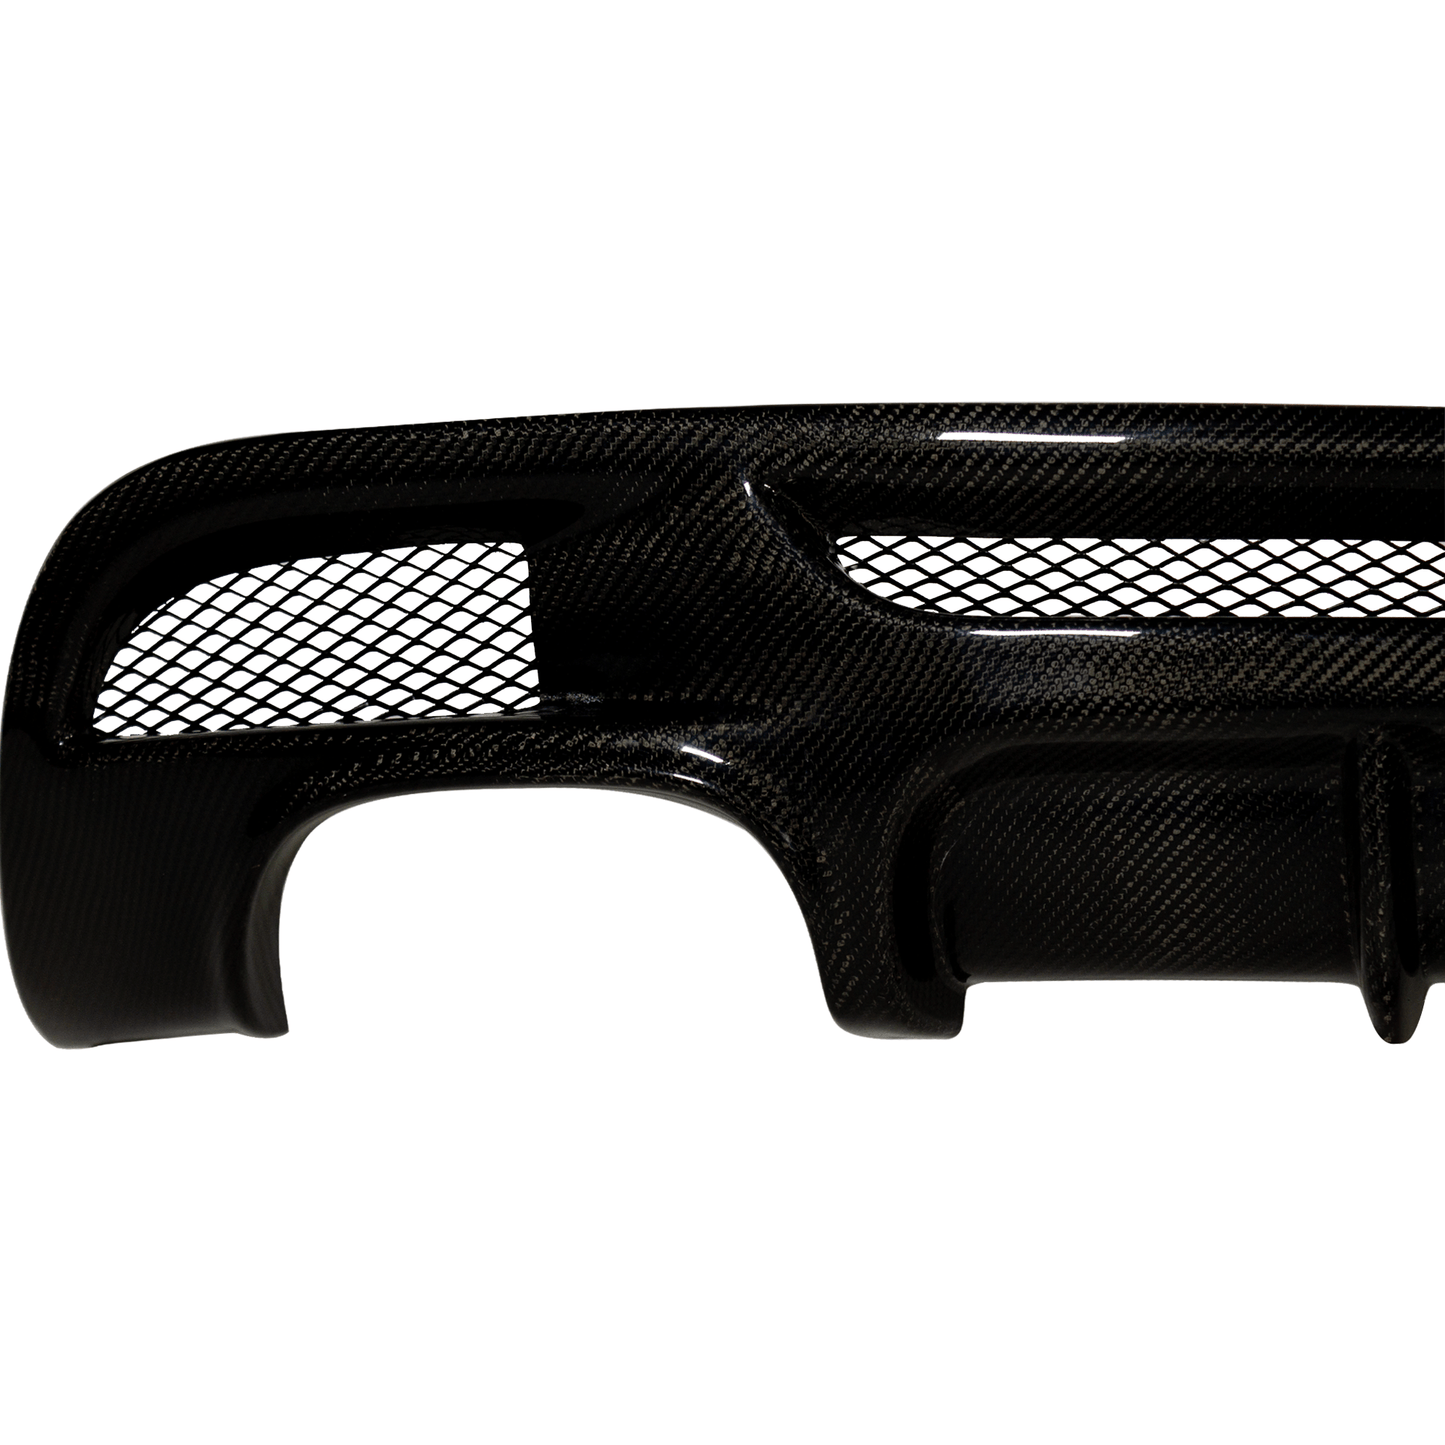 Suvneer MT Designed E82 Carbon Fiber Rear Diffuser